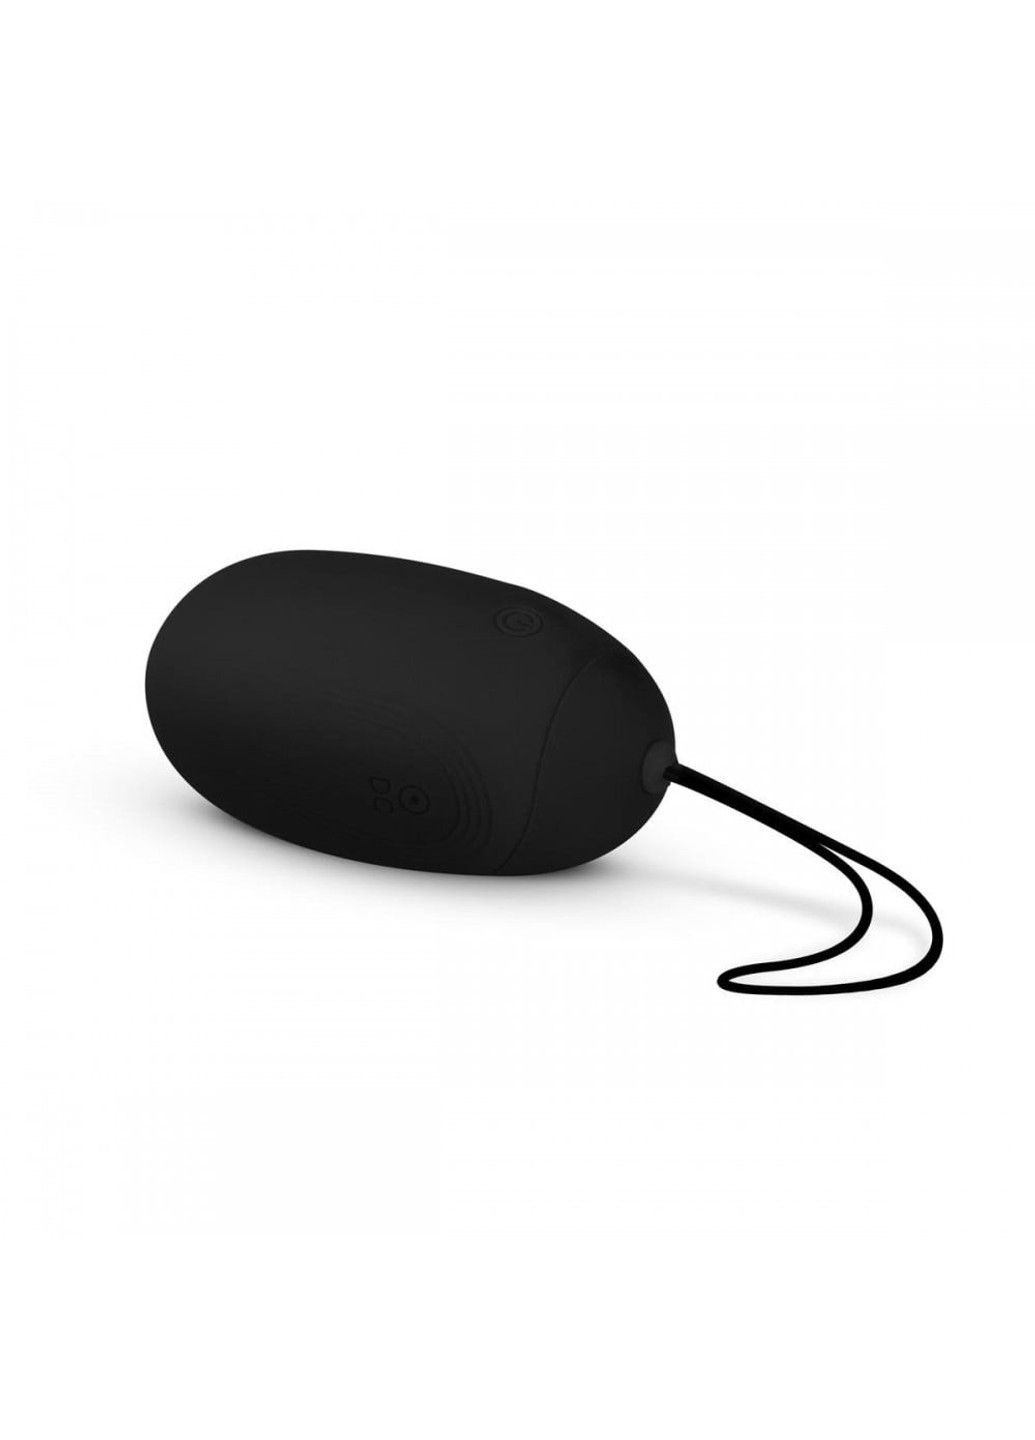 Виброяйцо Vibrating Egg With Remote Control черное EasyToys (290851080)